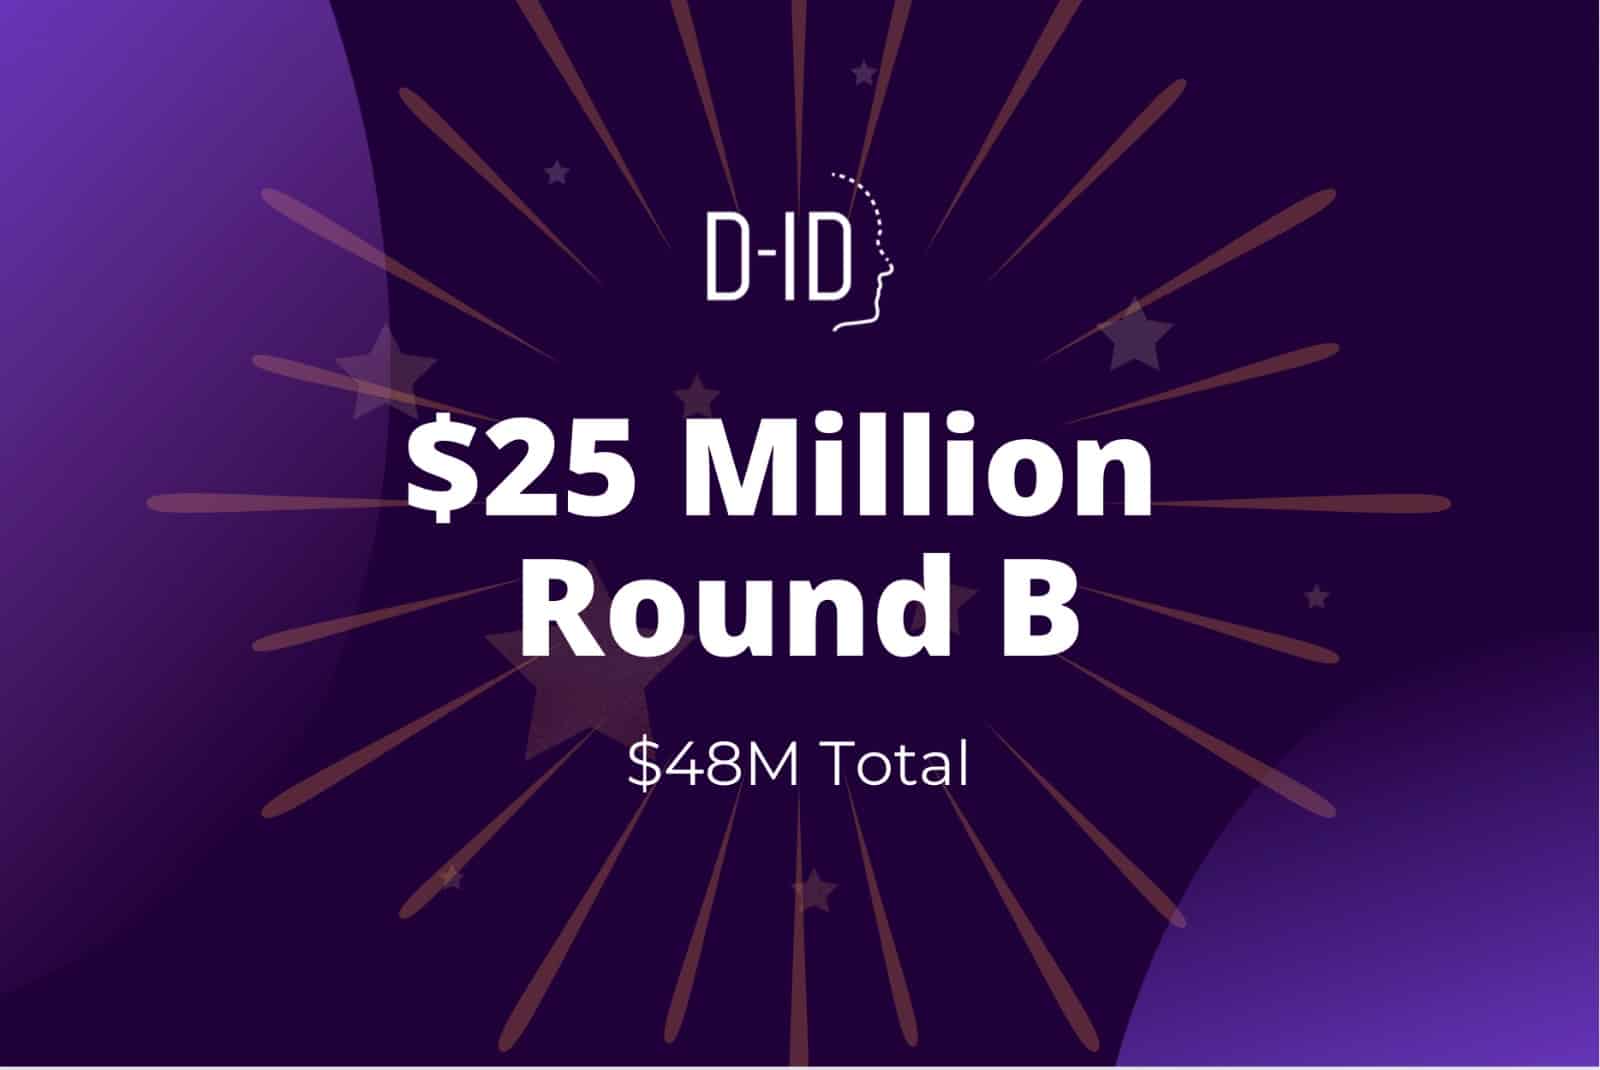 D-ID raises $25 million